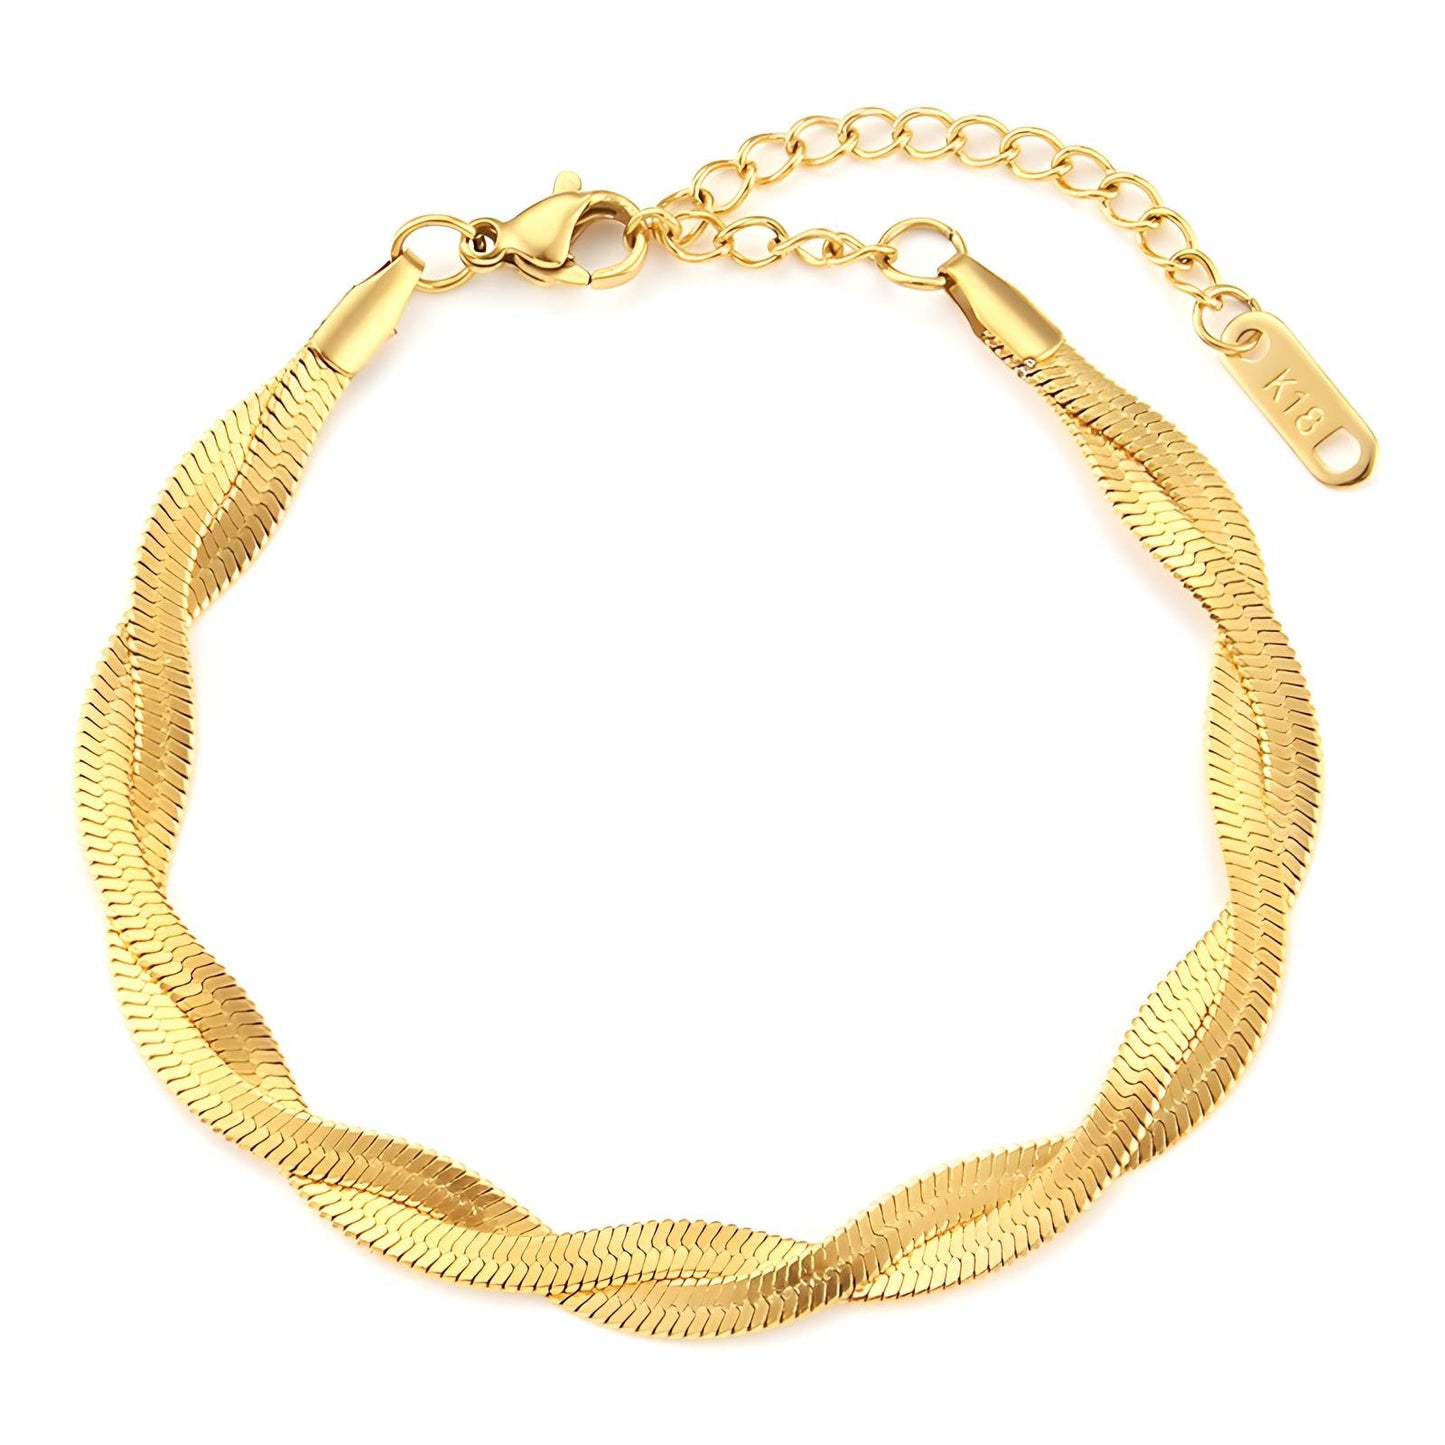 Luxury Defined: 18K Gold-Plated Flat Snake Chain Braided Bracelet